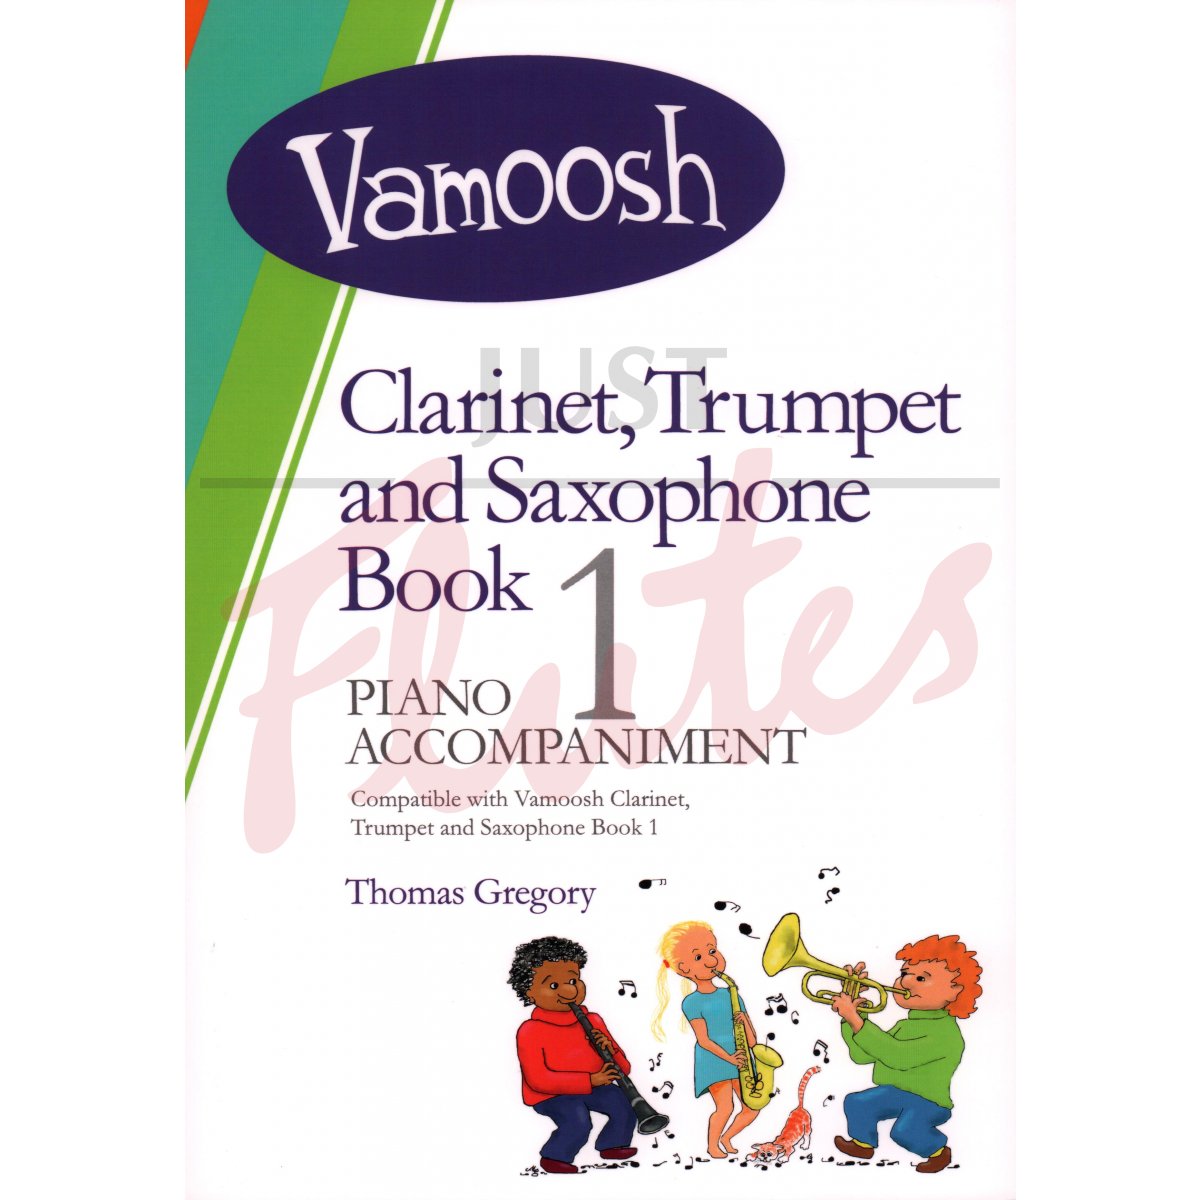 Vamoosh Clarinet/Trumpet/Saxophone Book 1 Piano Accompaniment